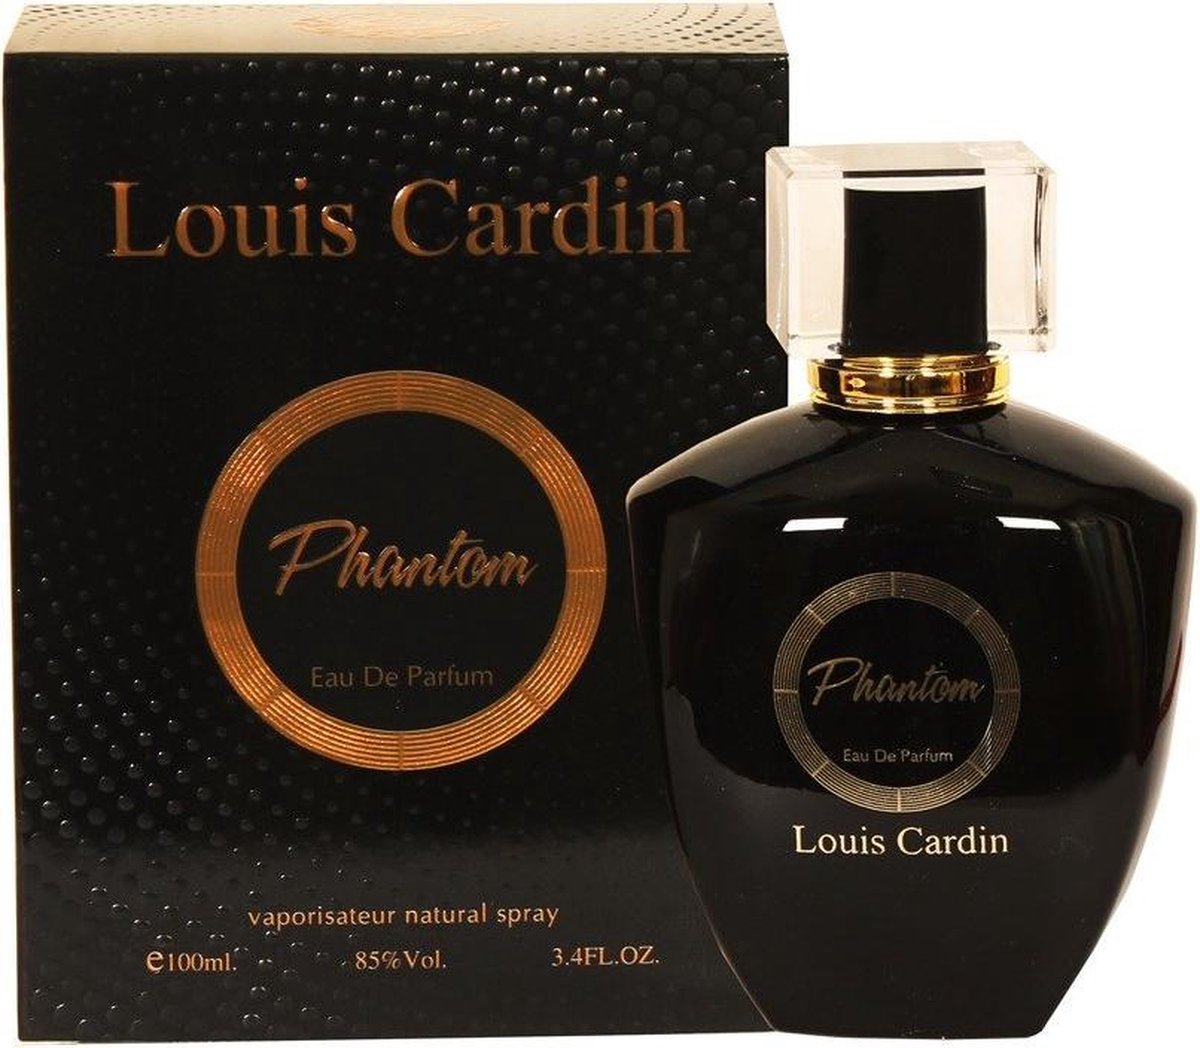 Louis Cardin ' Phantom 